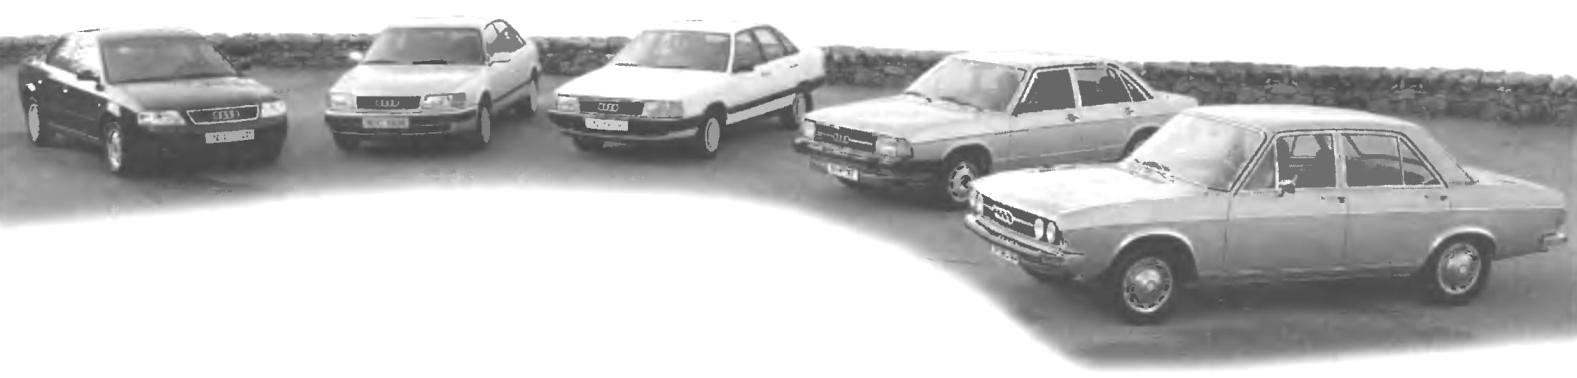 Predecessors AUDI A6 release in 2004 (right to left): AUDI 100 (1968), AUDI 100 (1976), AUDI 100 (1982), AUDI 100/AUDI A6 (1992), AUDI A6 (1997)